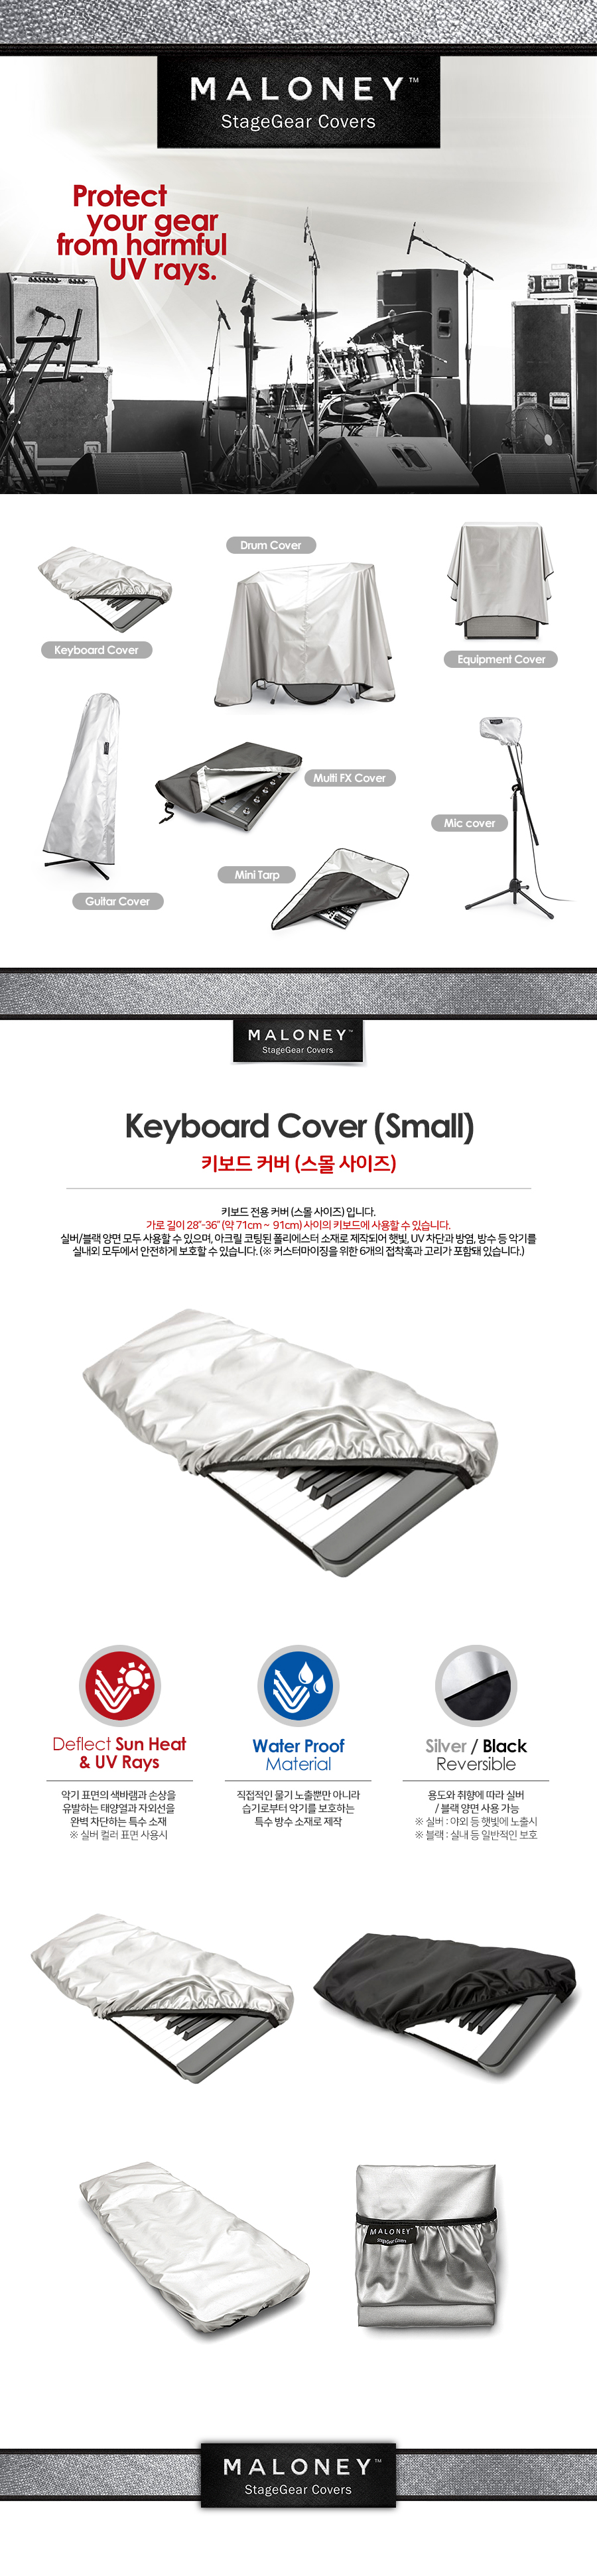 Maloney_Keyboard_Cover_Small_D.jpg